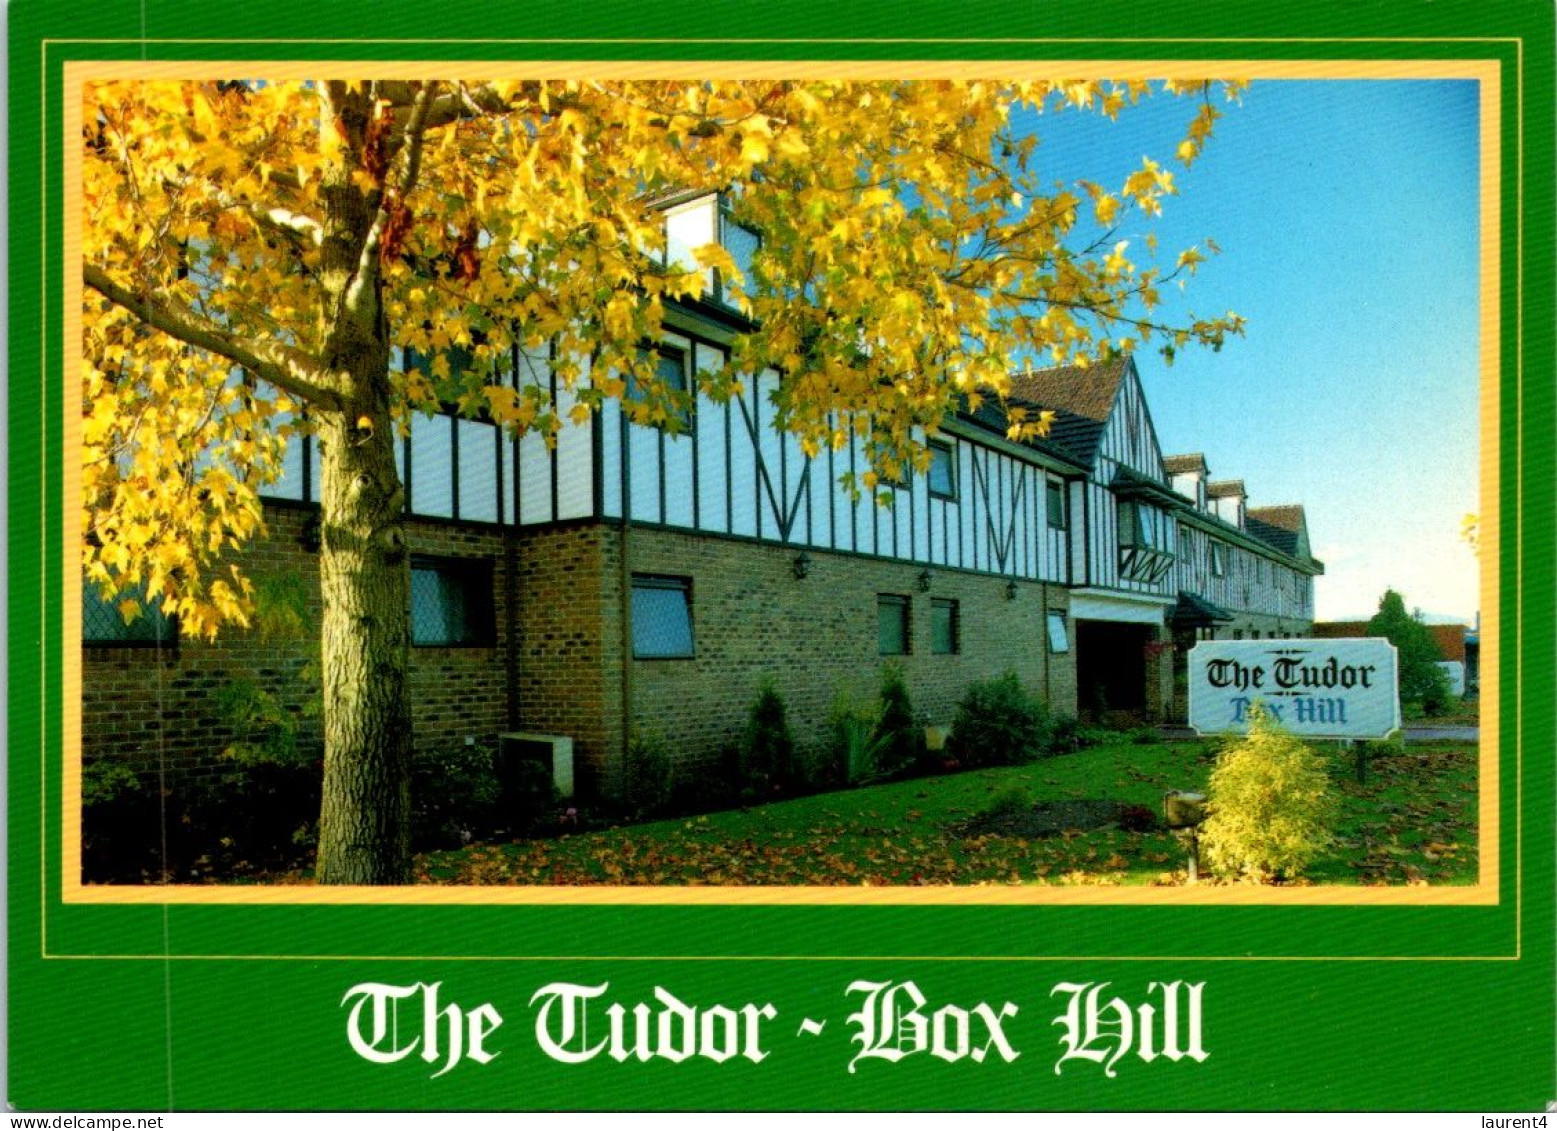 20-5-2024 (5 Z 38) UK ? (posted) Tudor Box Hill